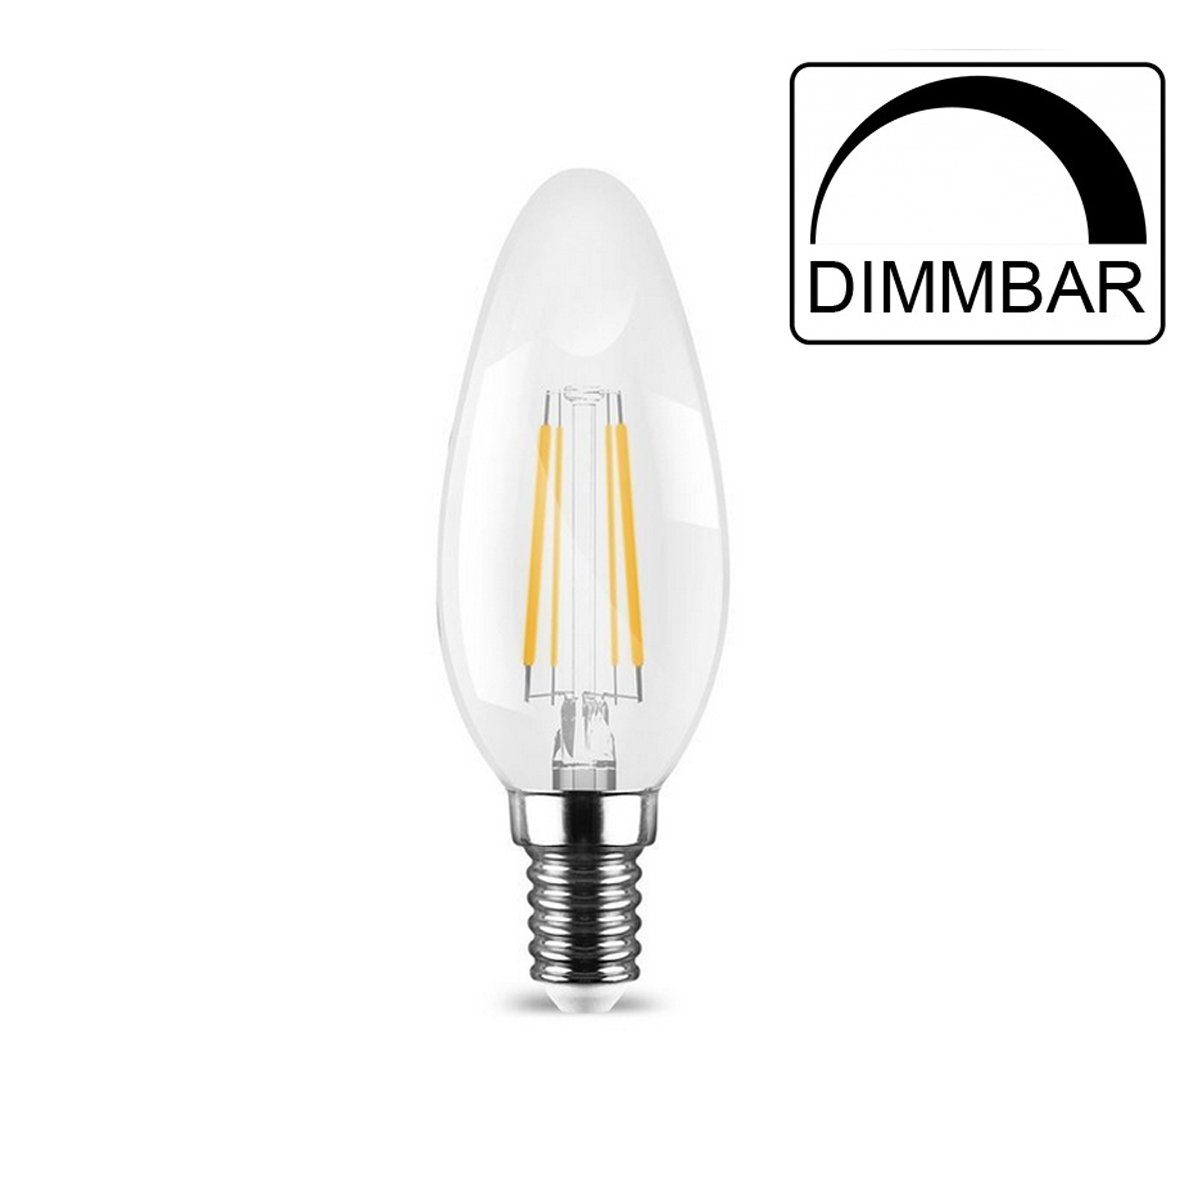 2W E14 Filament Glühfaden Birne Lampe Flammen-Form Klar